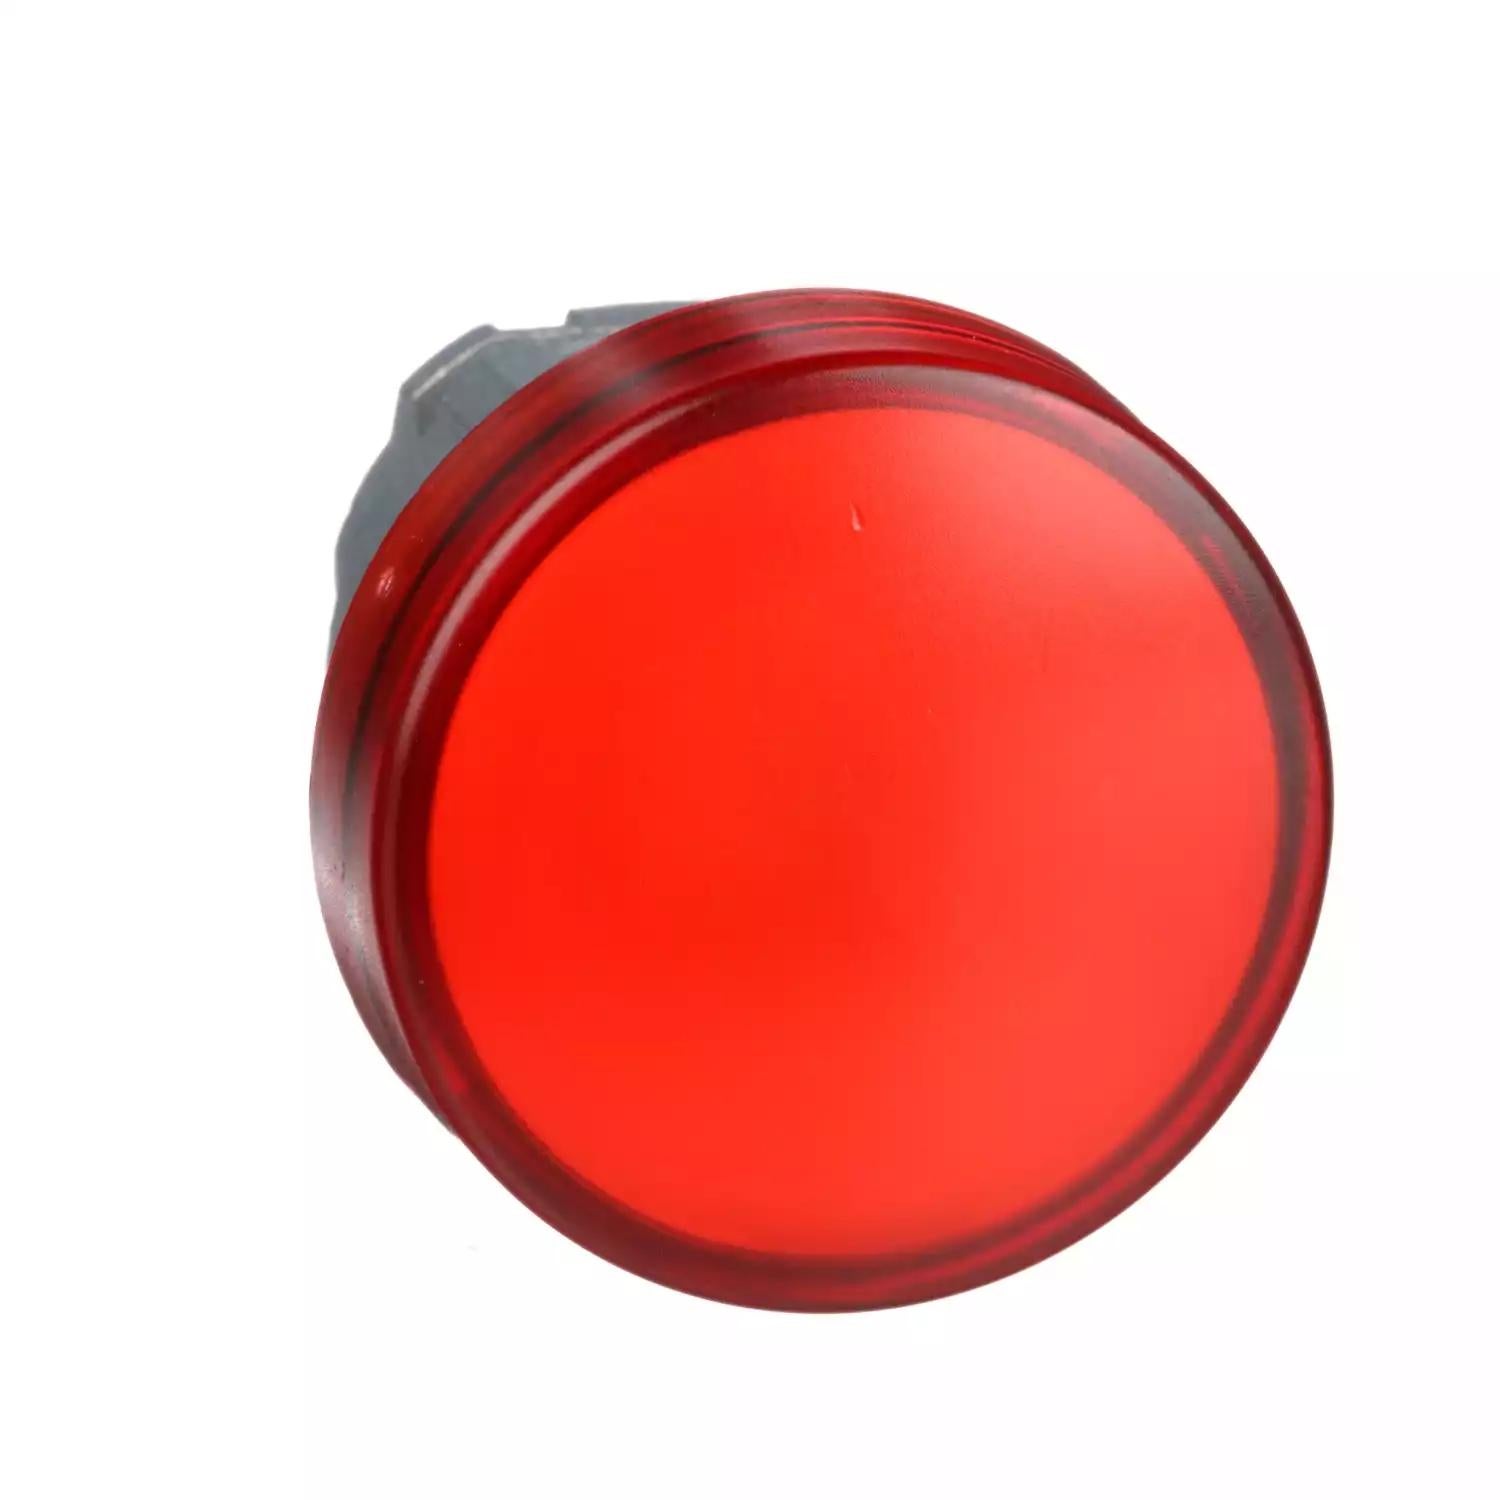 Harmony XB4, Pilot light head, metal, red, Ø22, plain lens for integral LED